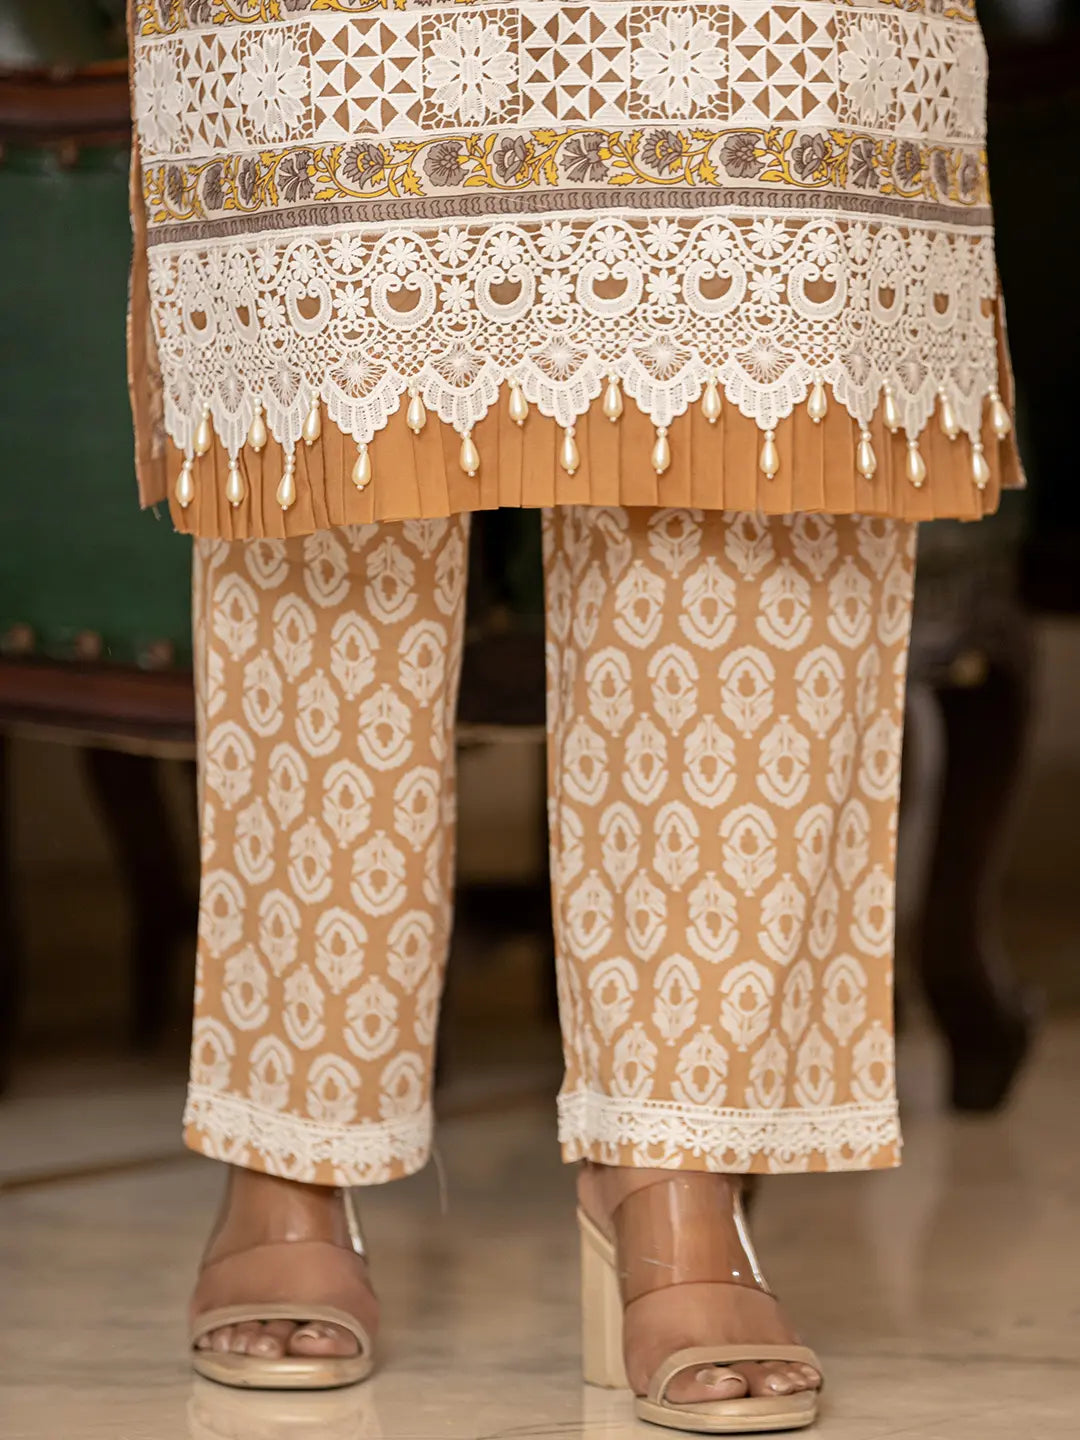 Mustard Floral Print Straight Pakistani Style Kurta Trouser And Dupatta Set-Yufta Store-6889SKDMSM